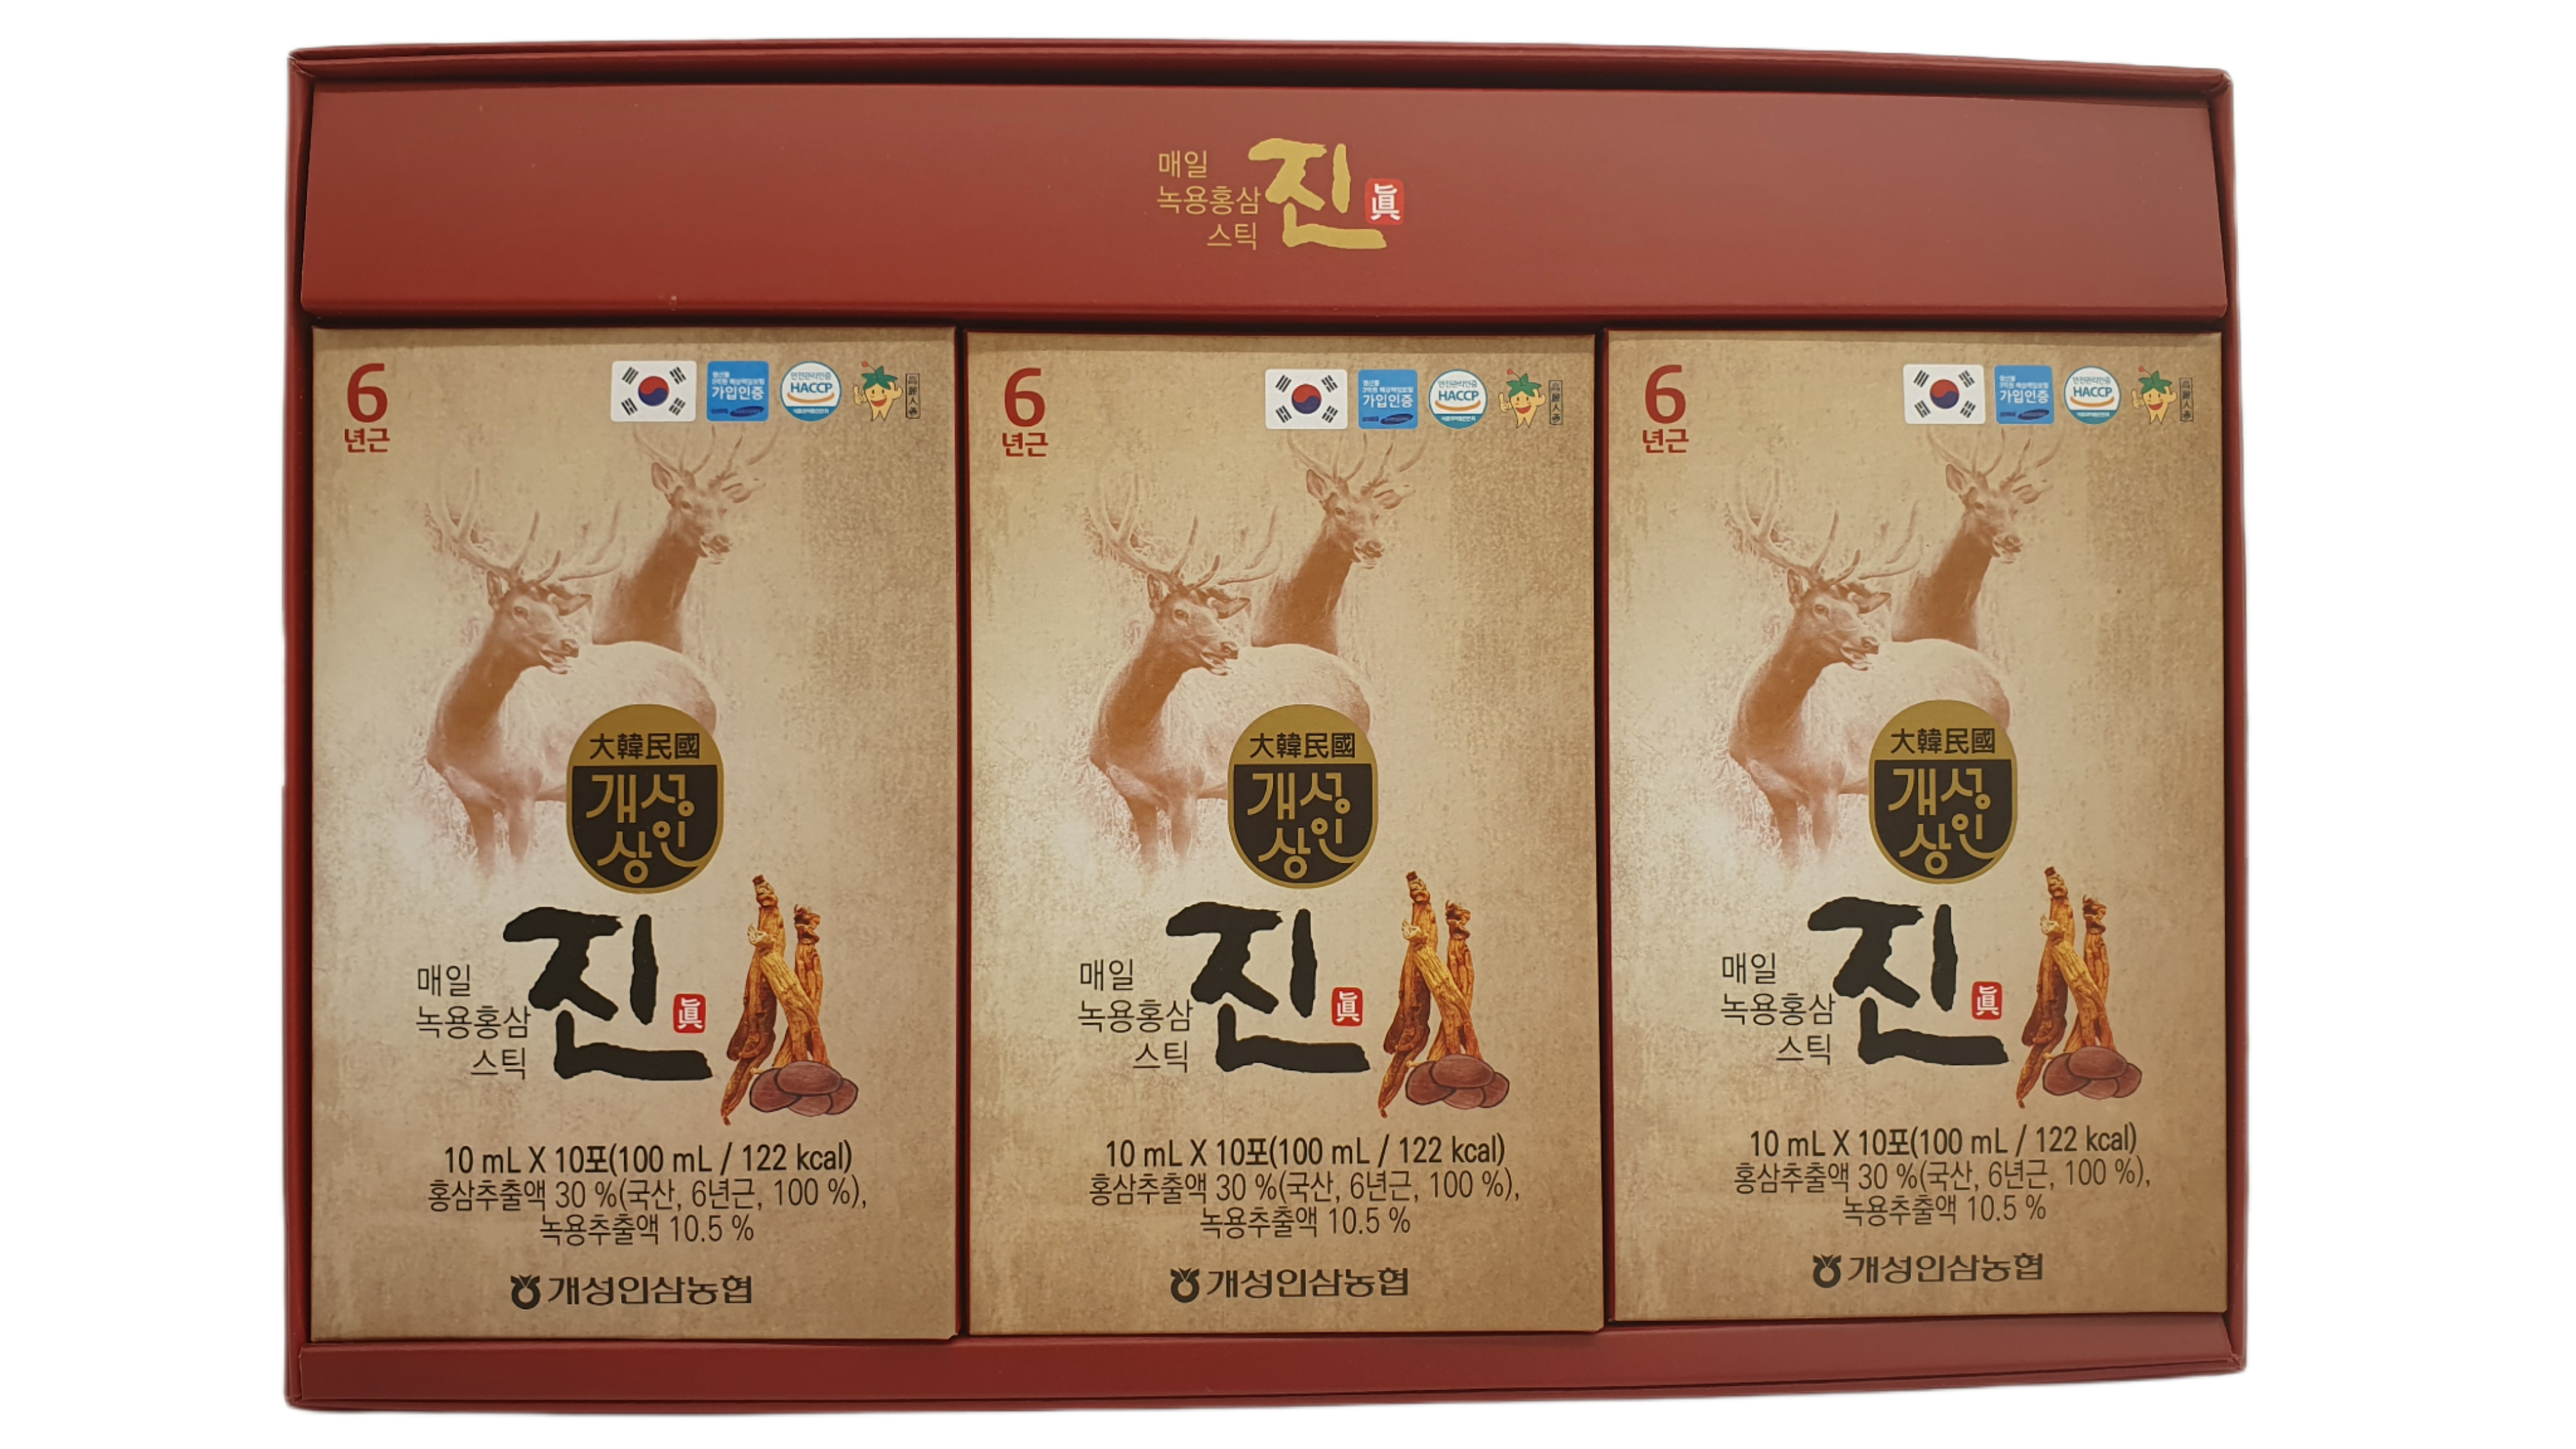 Nonghyeob daily deer antler korean red ginseng jin stick 10ml x 30